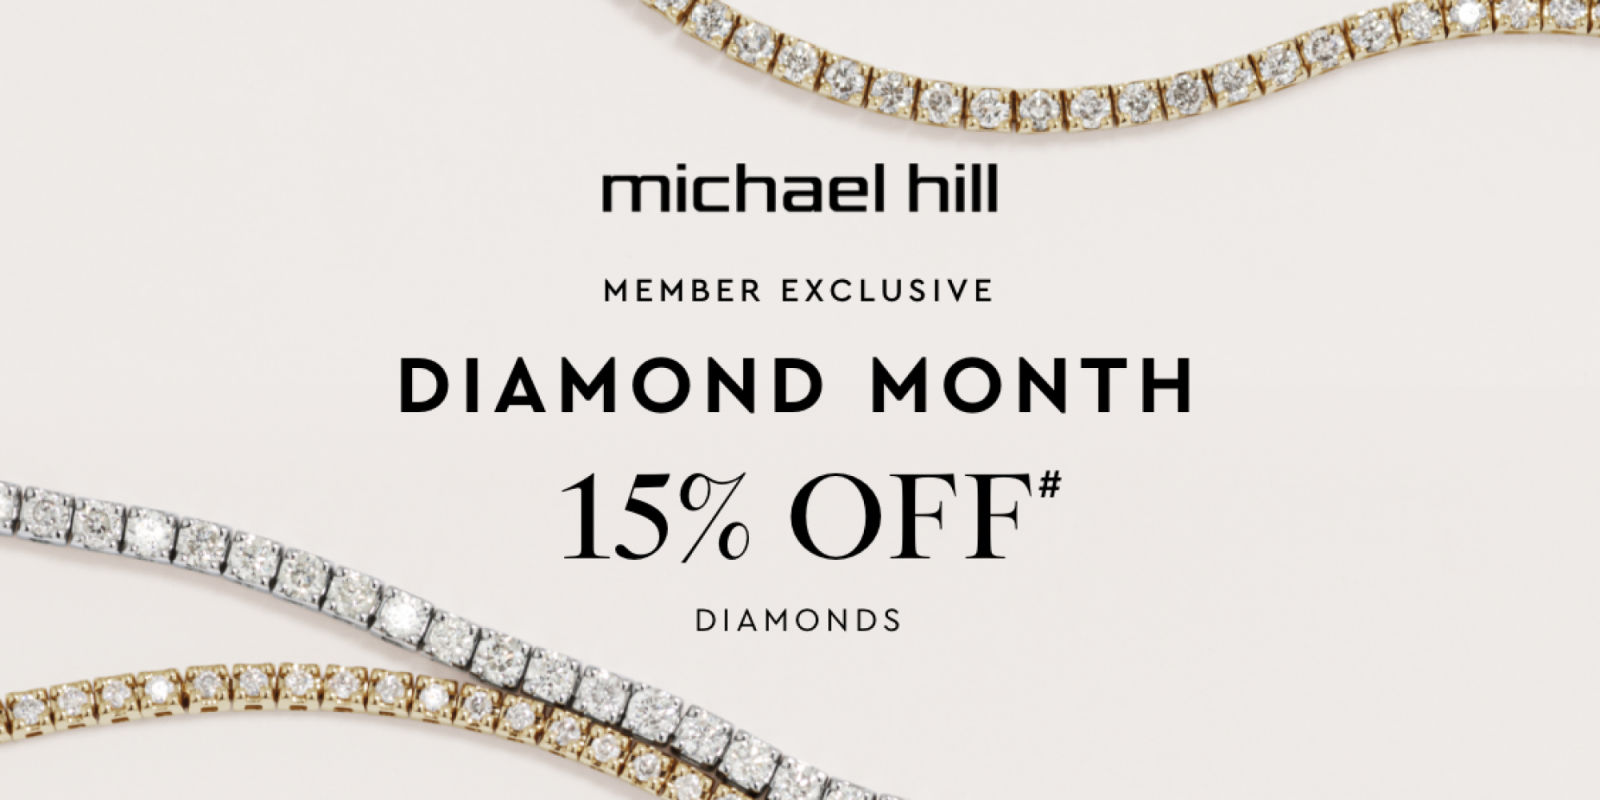 15% off Diamonds - Member exclusive. 